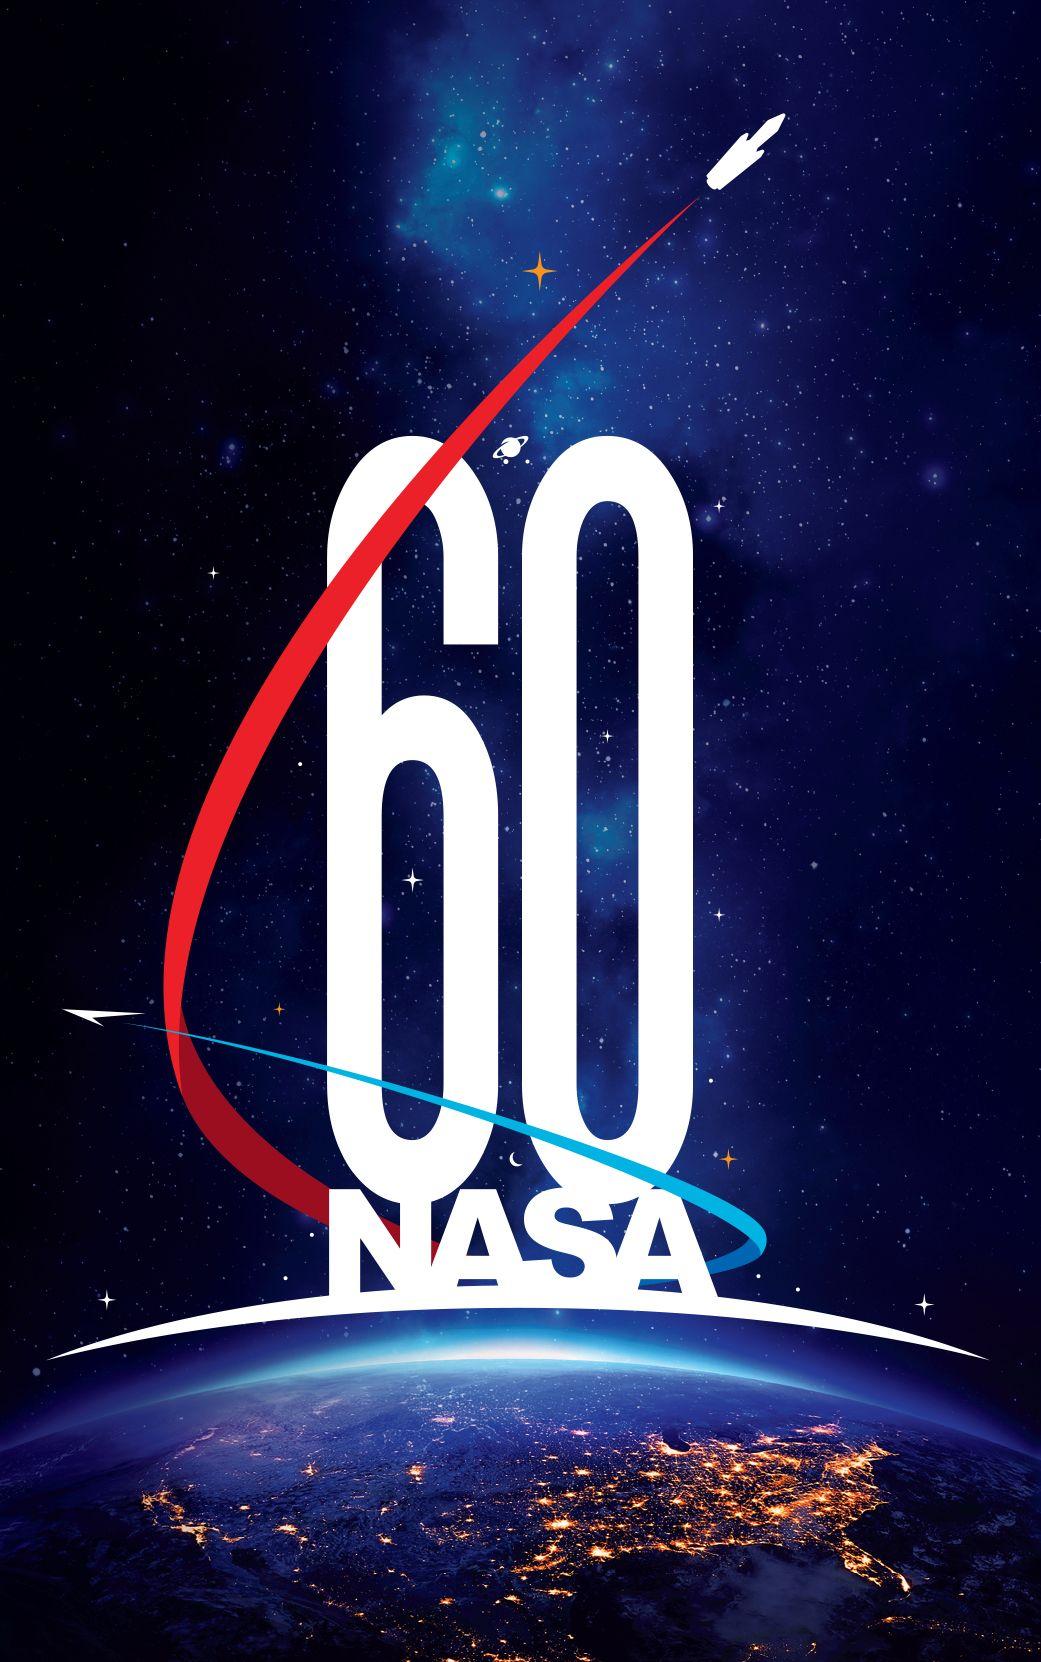 Official NASA Logo - New NASA Logo For Upcoming 60th Anniversary Designed by Matthew Skeins